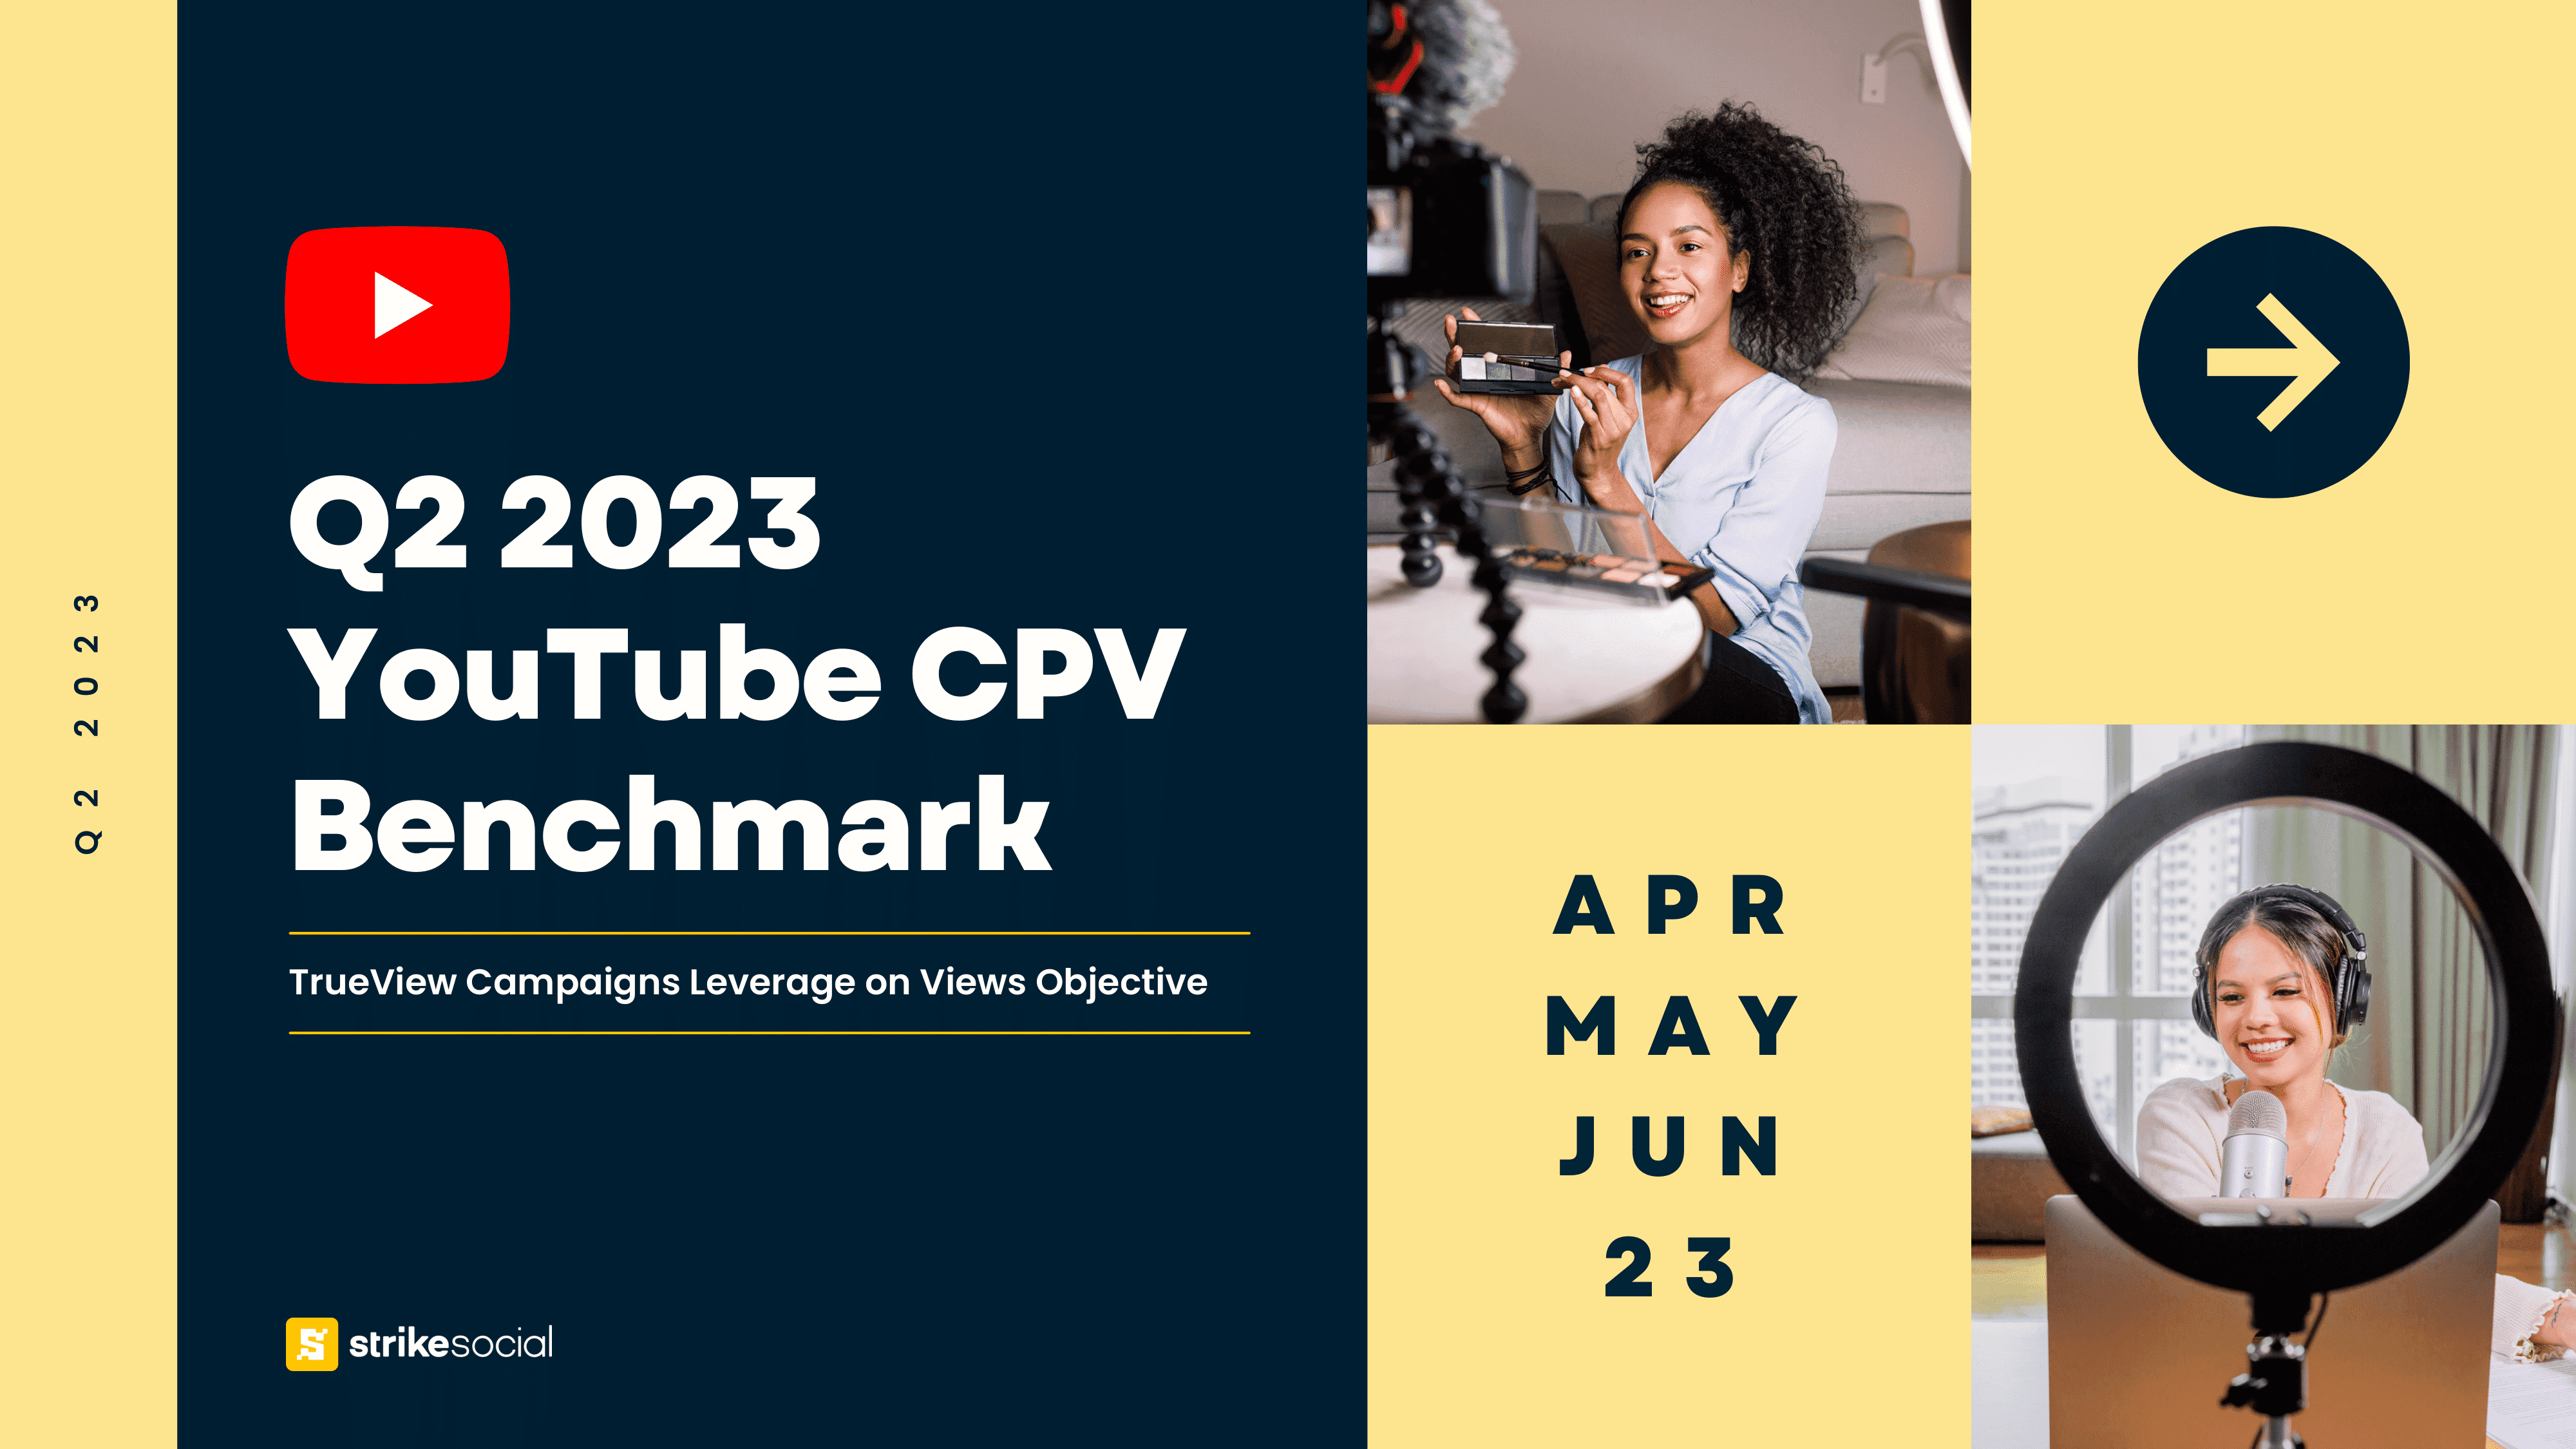 Q2-2023-YouTube-CPV-Benchmark-Strike-Social-Header v2